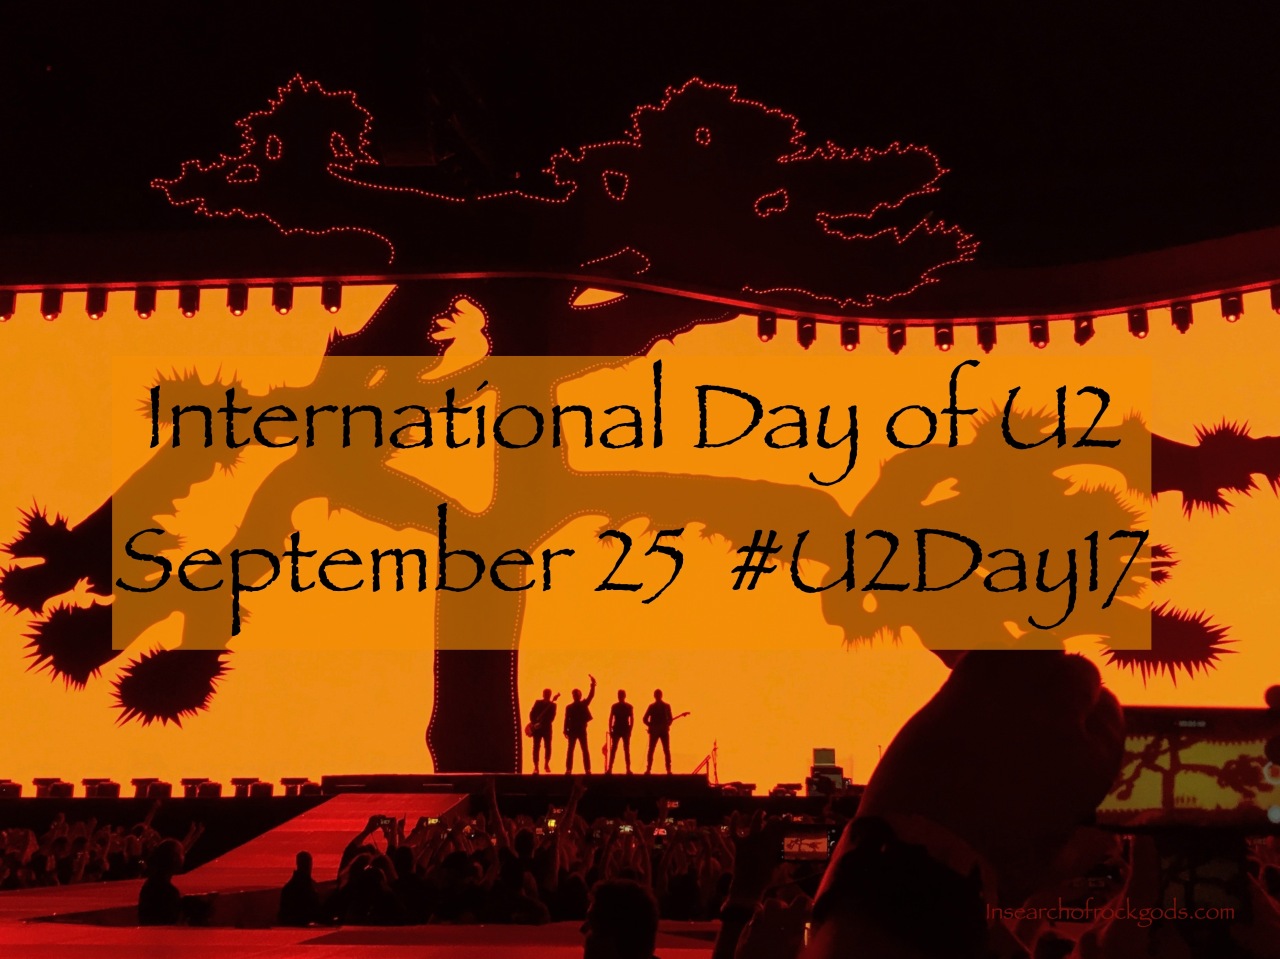 International Day of U2